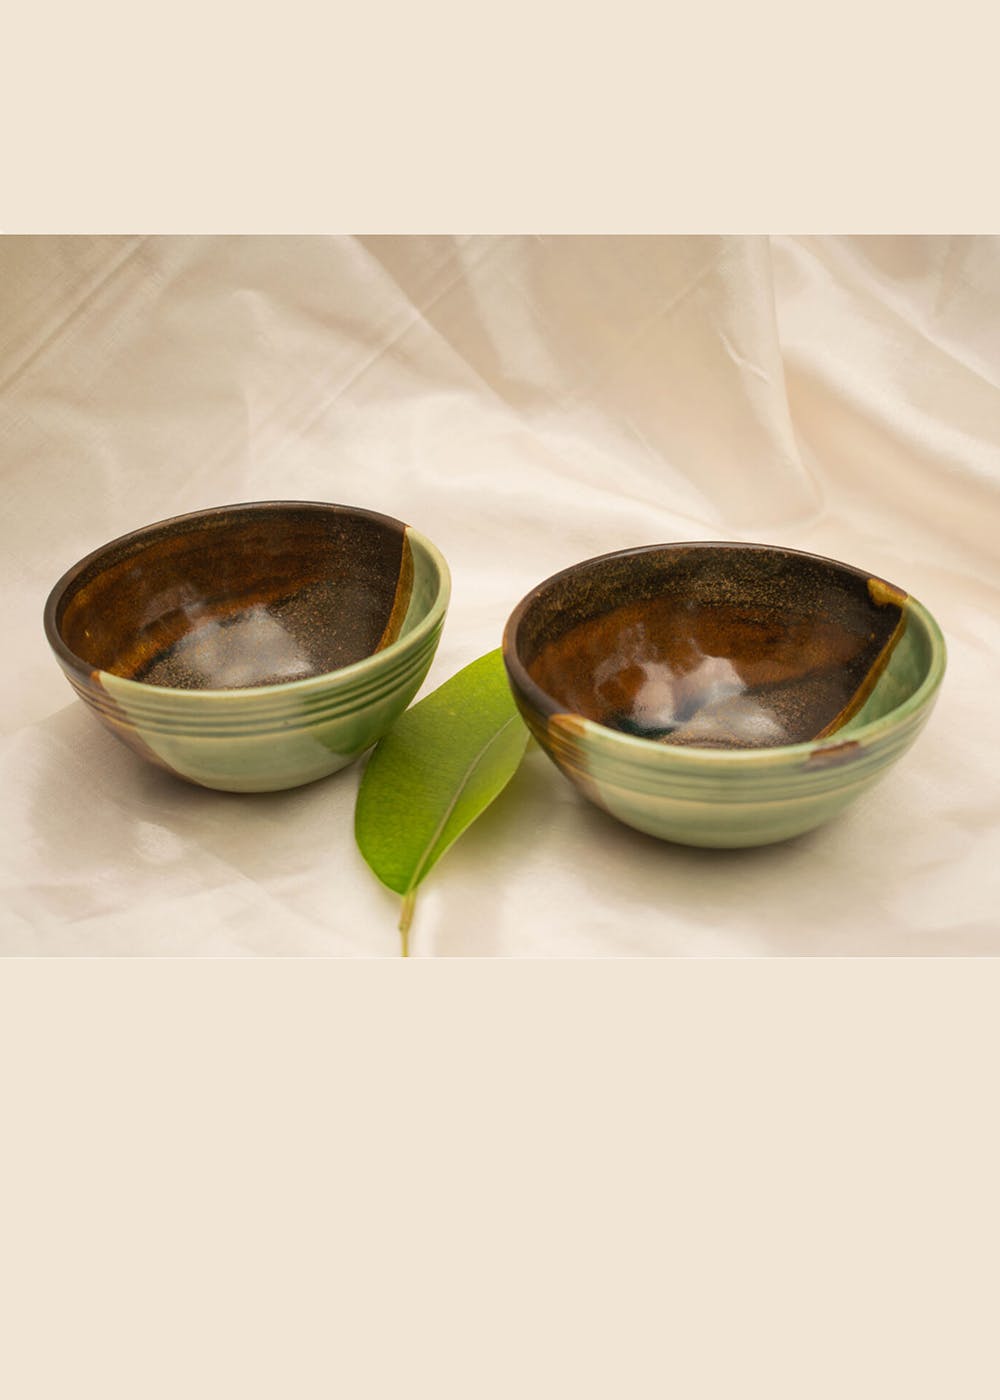 Red Soup Bowl - Claybotik  Pottery & Ceramic Studio In Jaipur